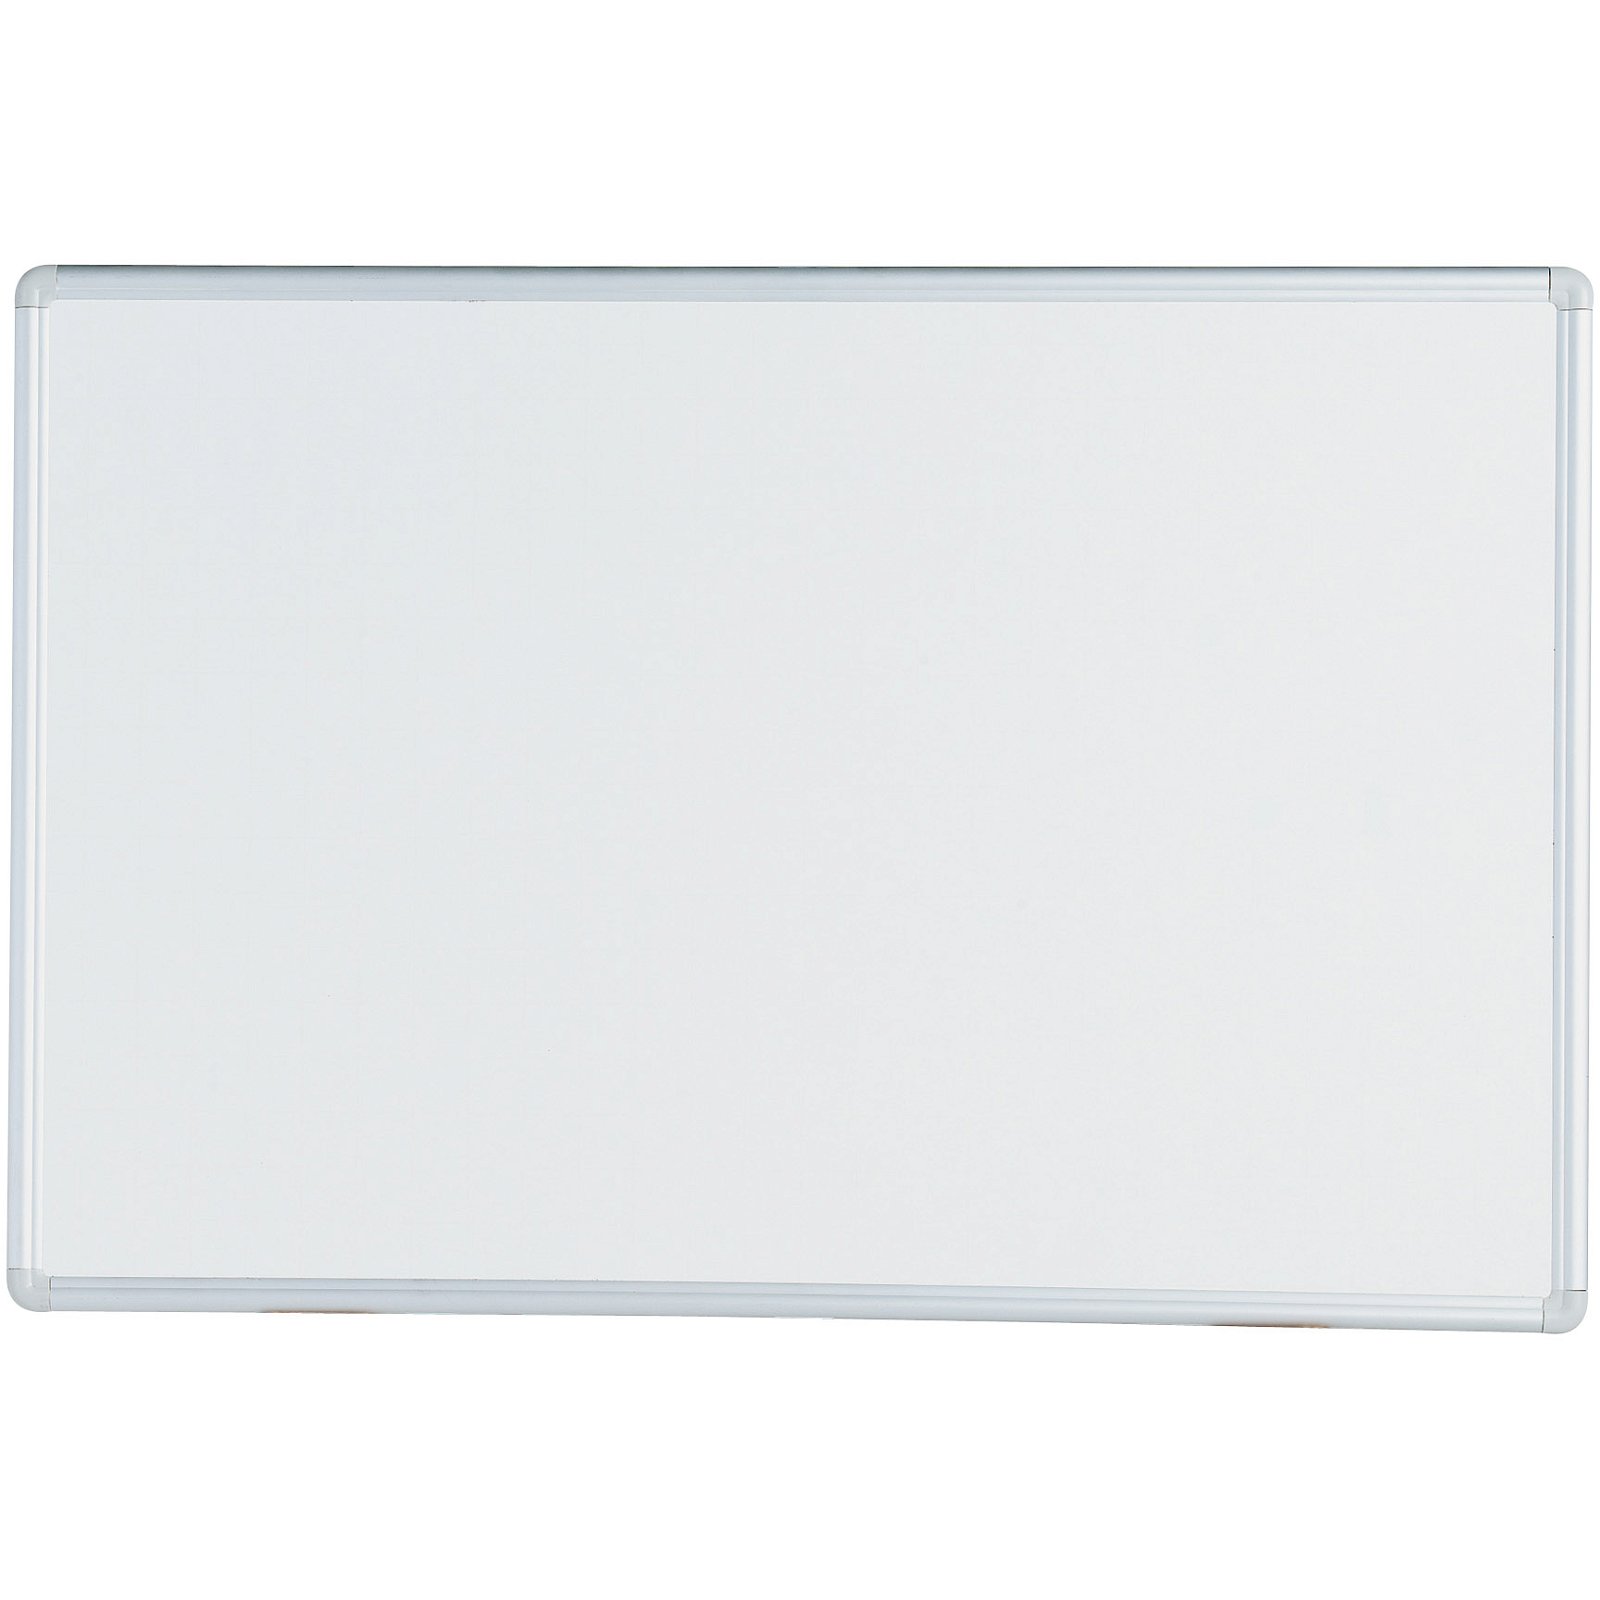 Q-connect lakeret whiteboardtavle 1200 mm x 900 mm, Stål/Aluminium